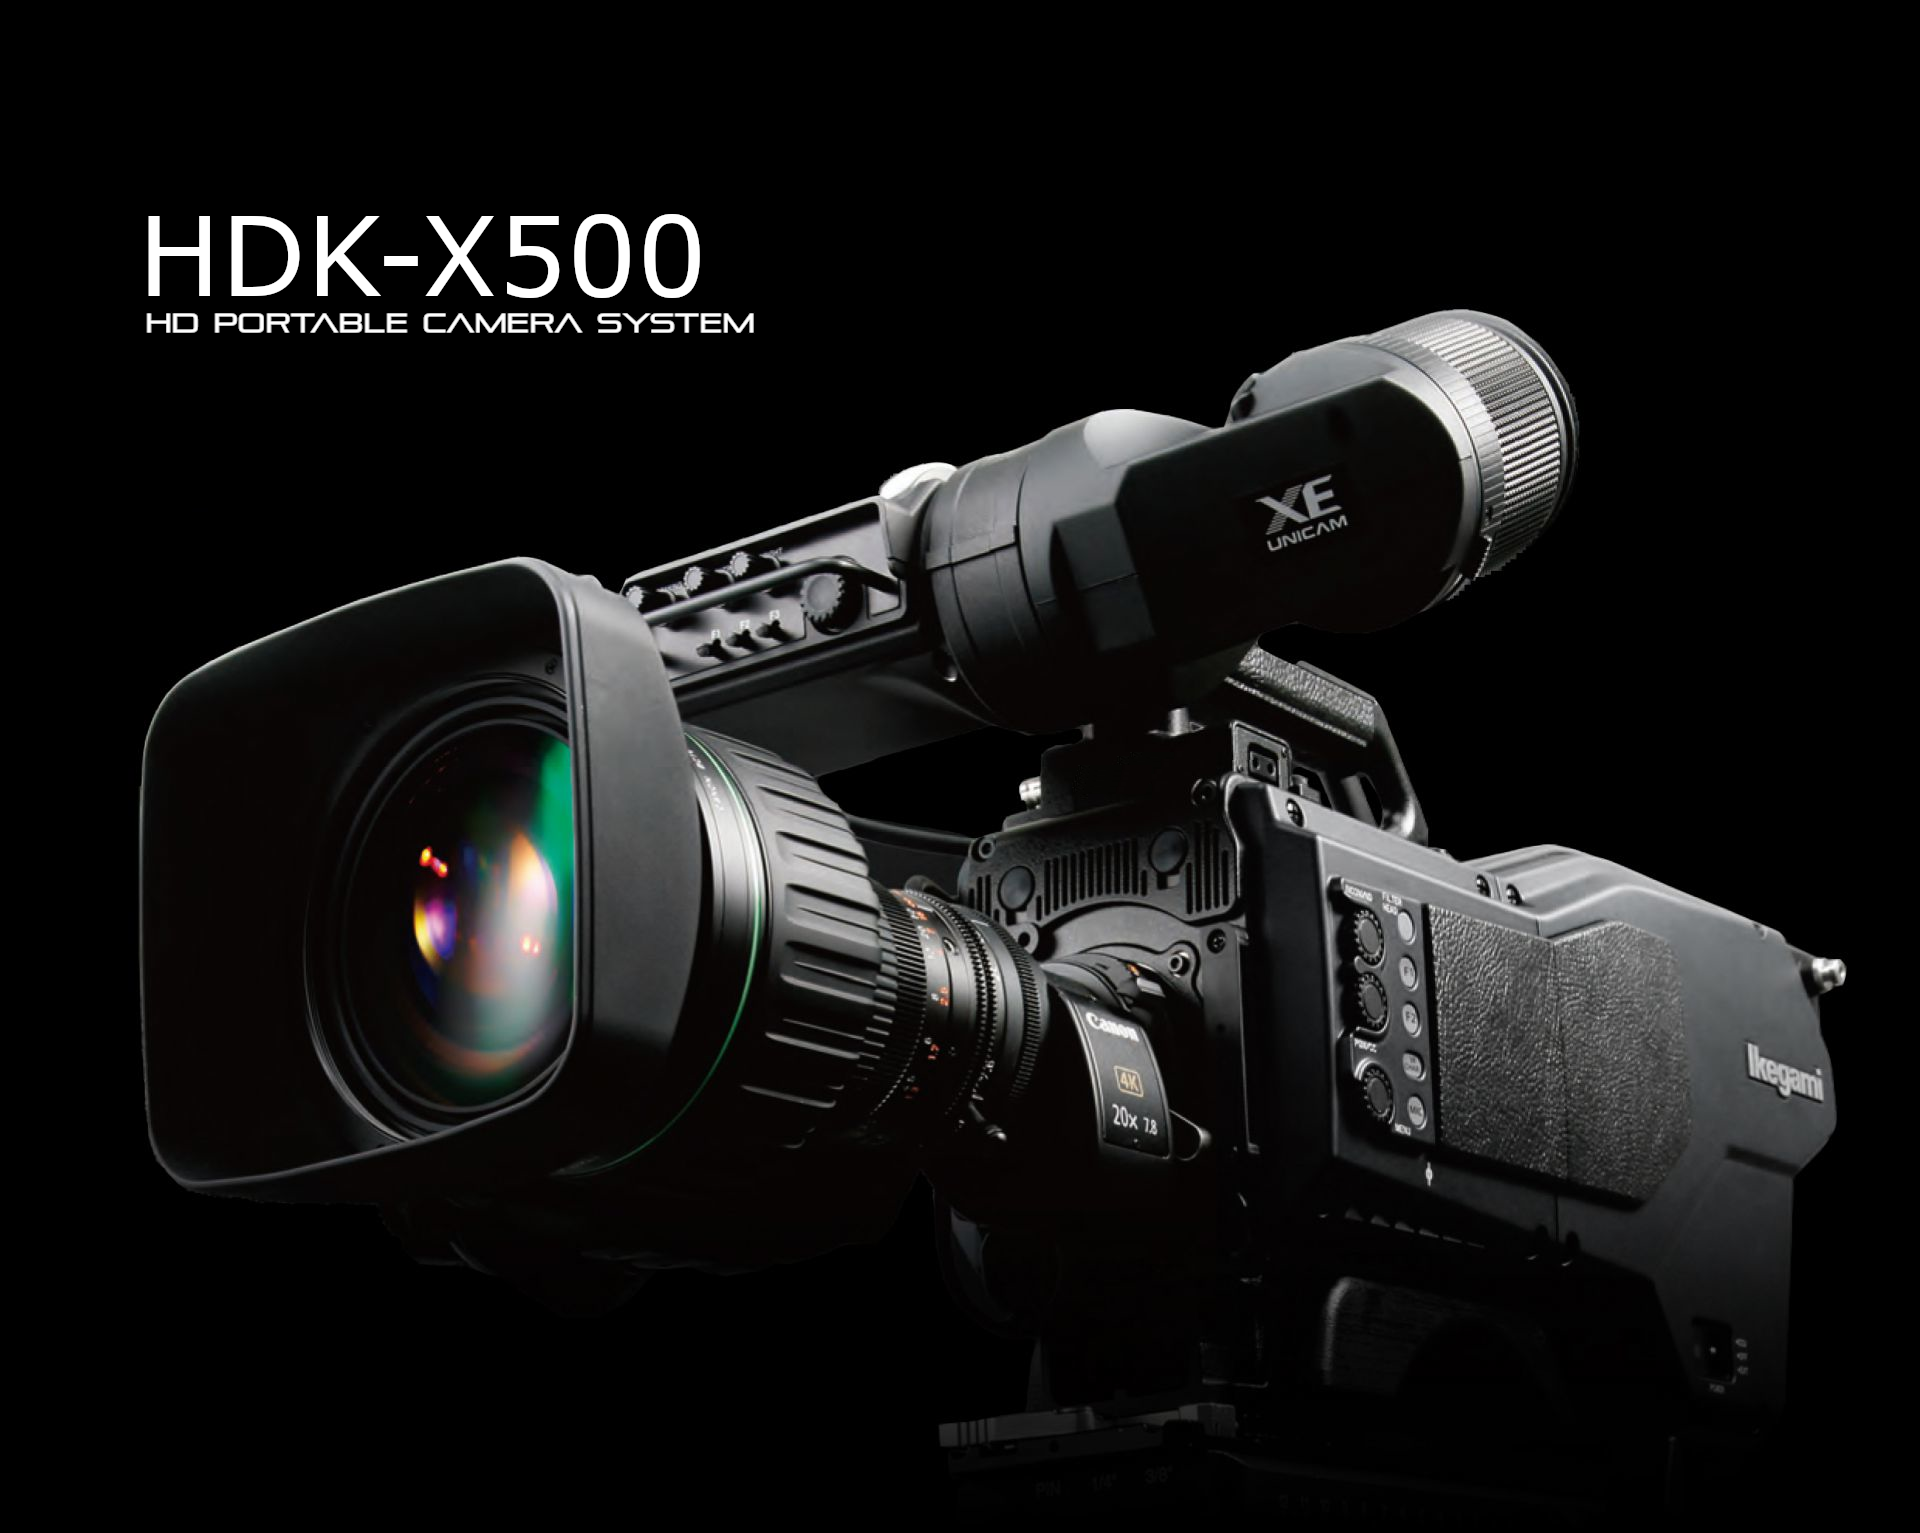 HDK-X500